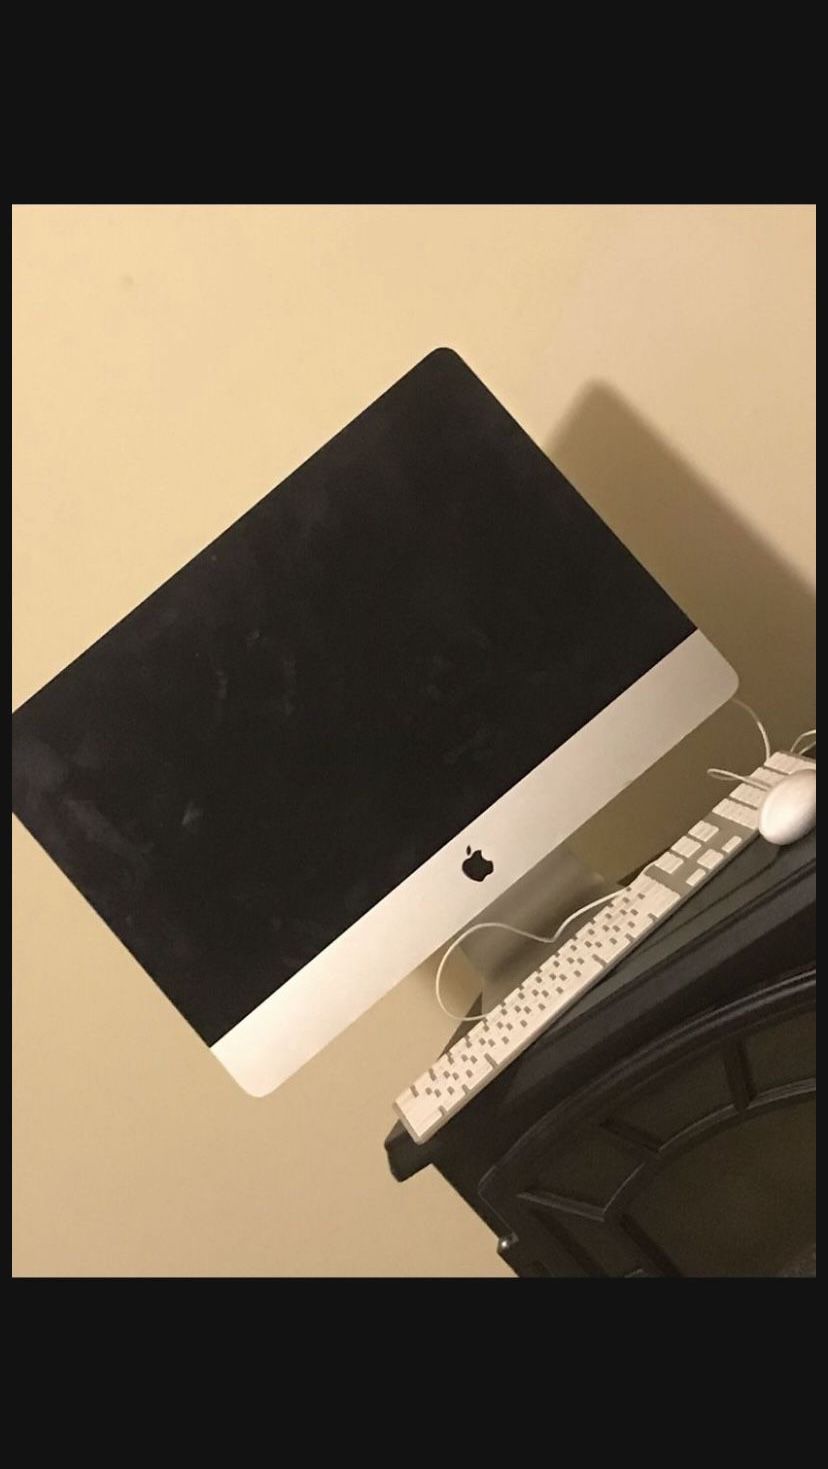 Apple iMac 2016